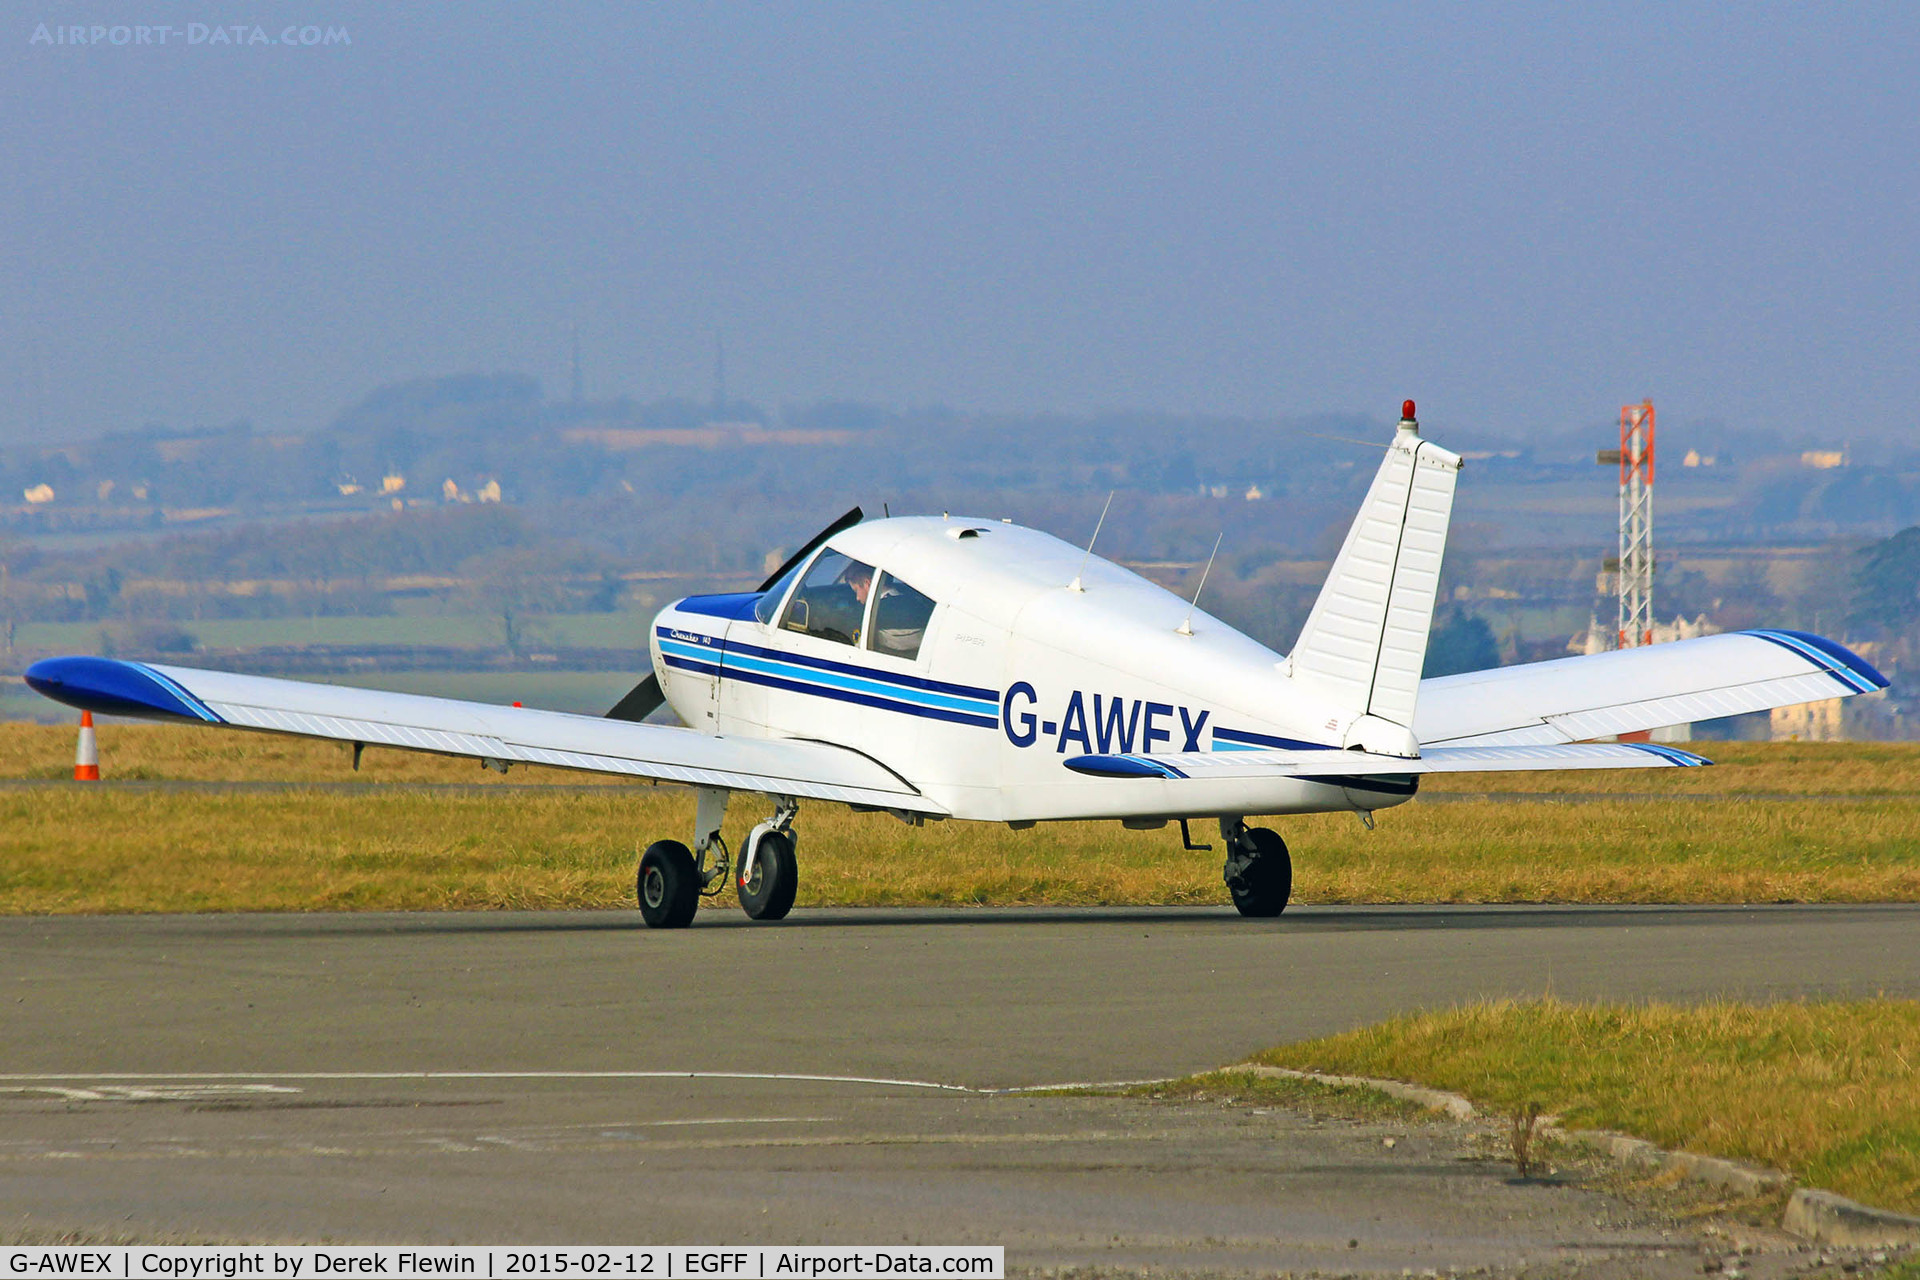 G-AWEX, 1968 Piper PA-28-140 Cherokee C/N 28-24472, Cherokee, East midlands based, previously N11C, seen shutting down on the GA apron.